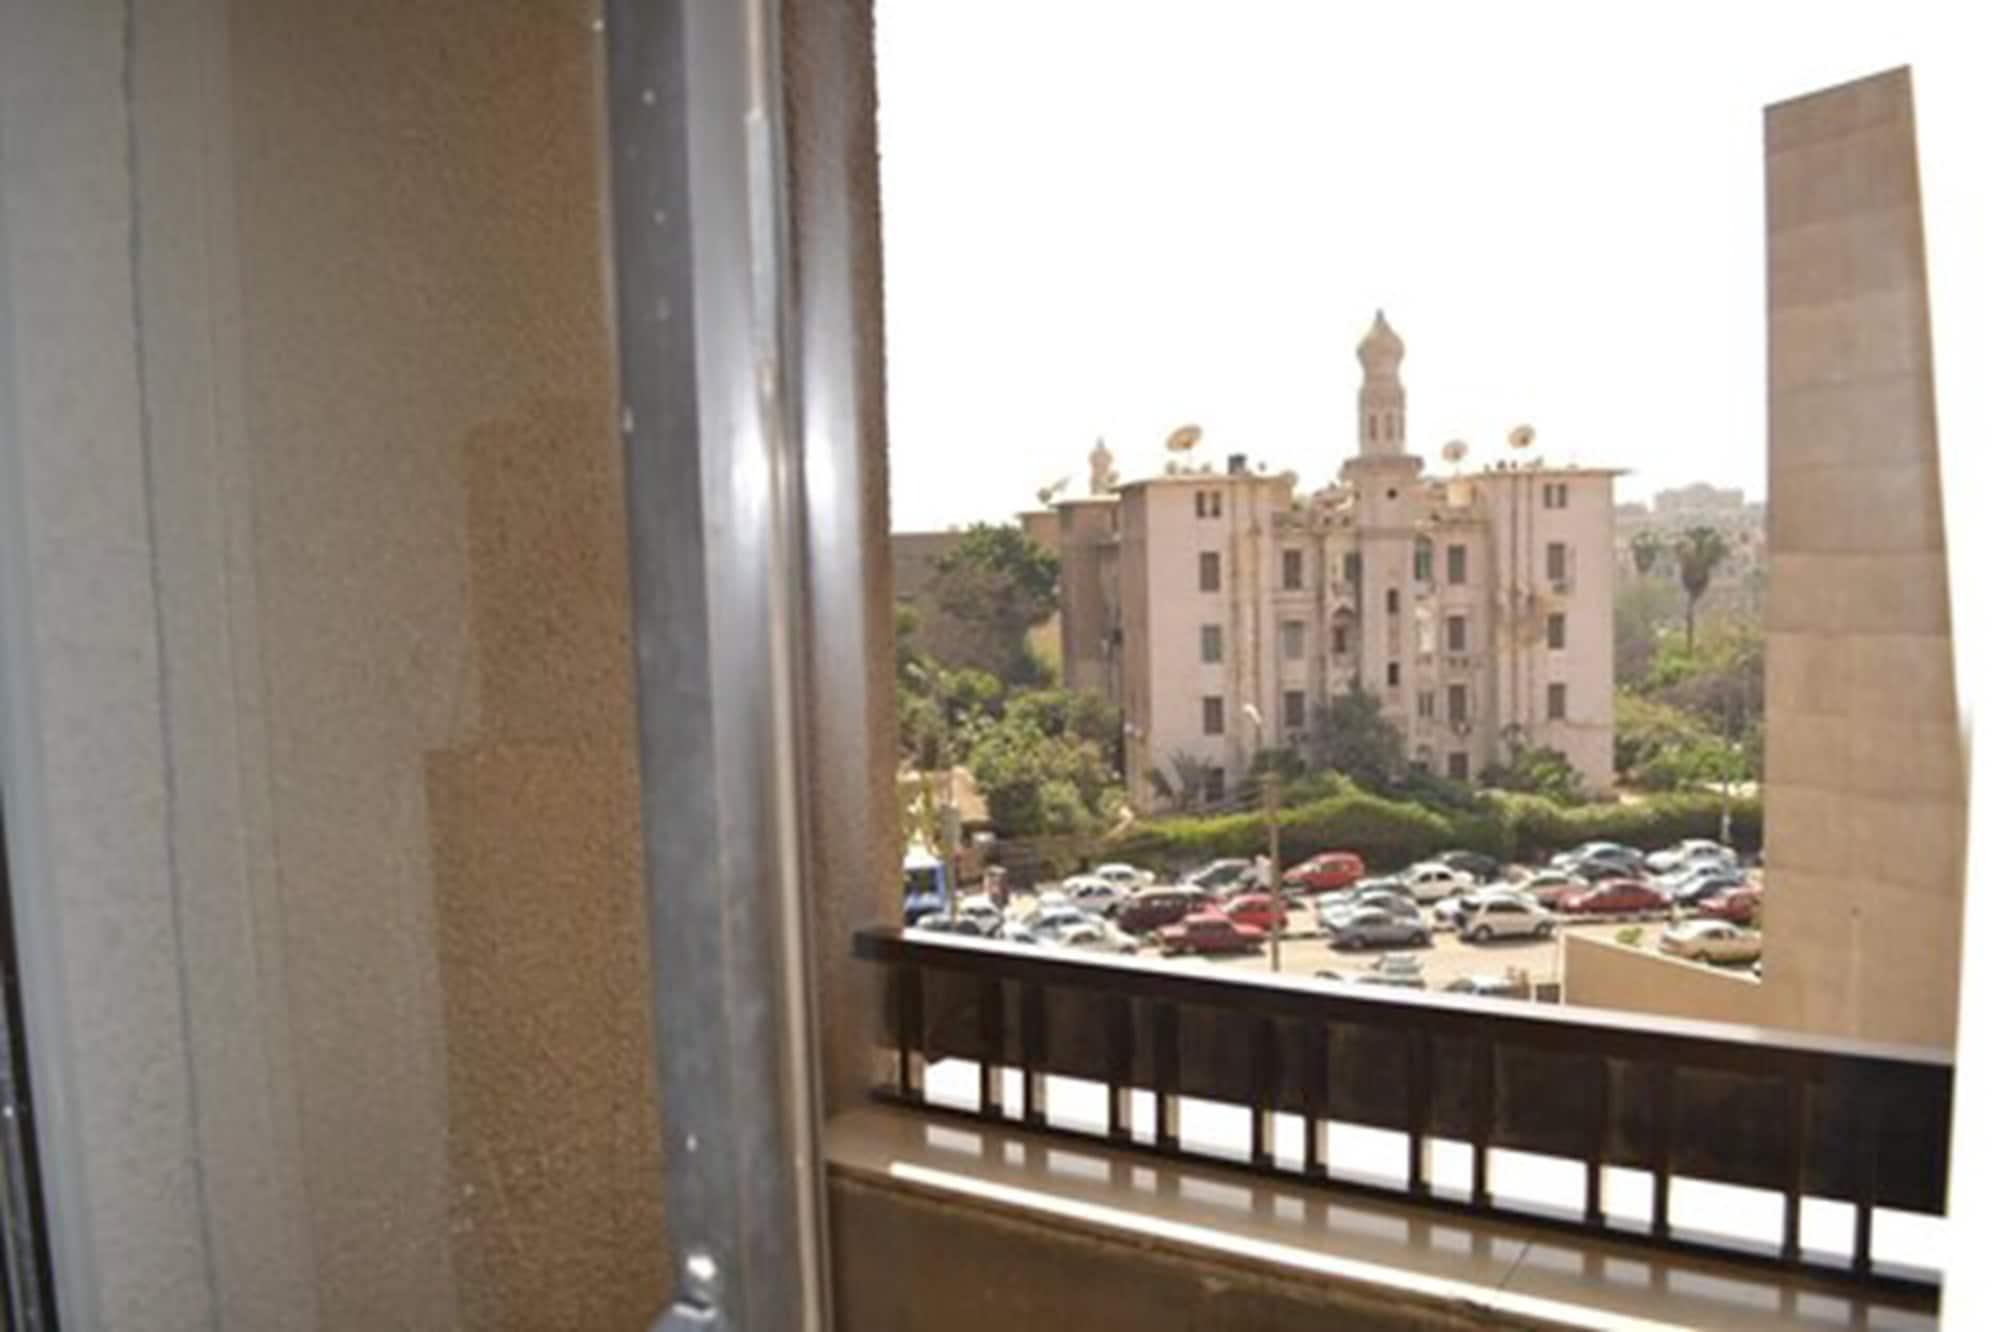 Beirut Hotel Kairo Bagian luar foto